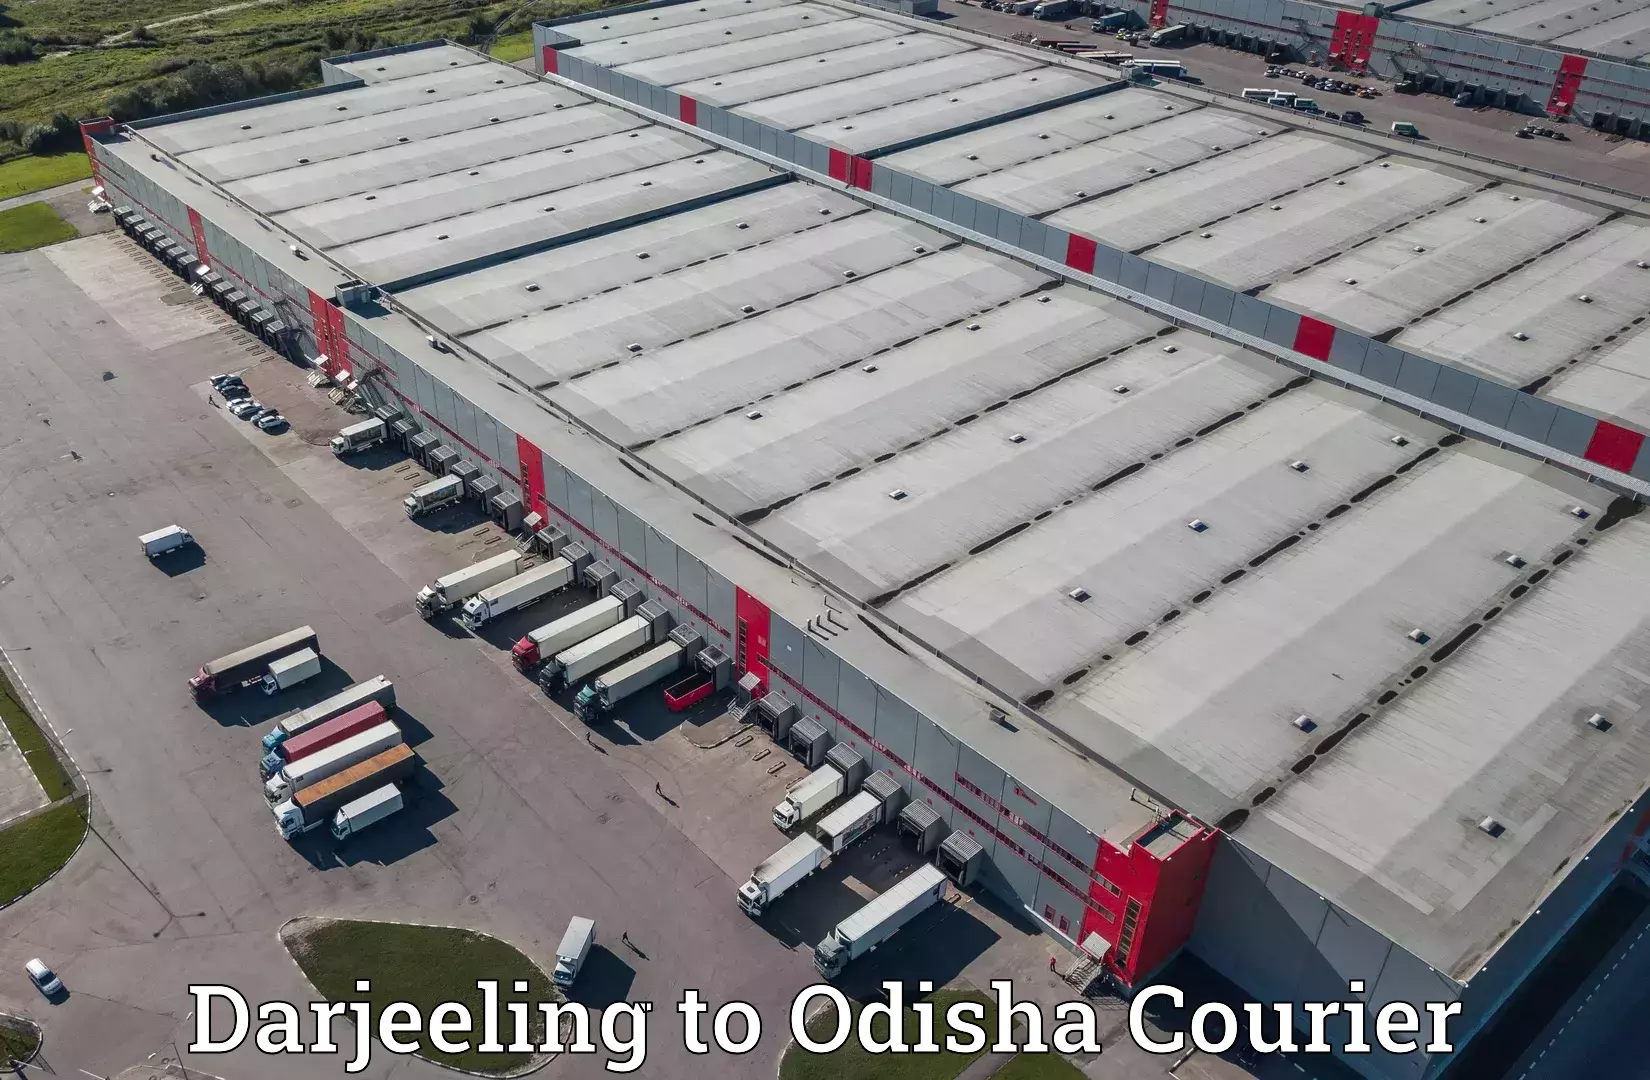 High-priority parcel service Darjeeling to Odisha